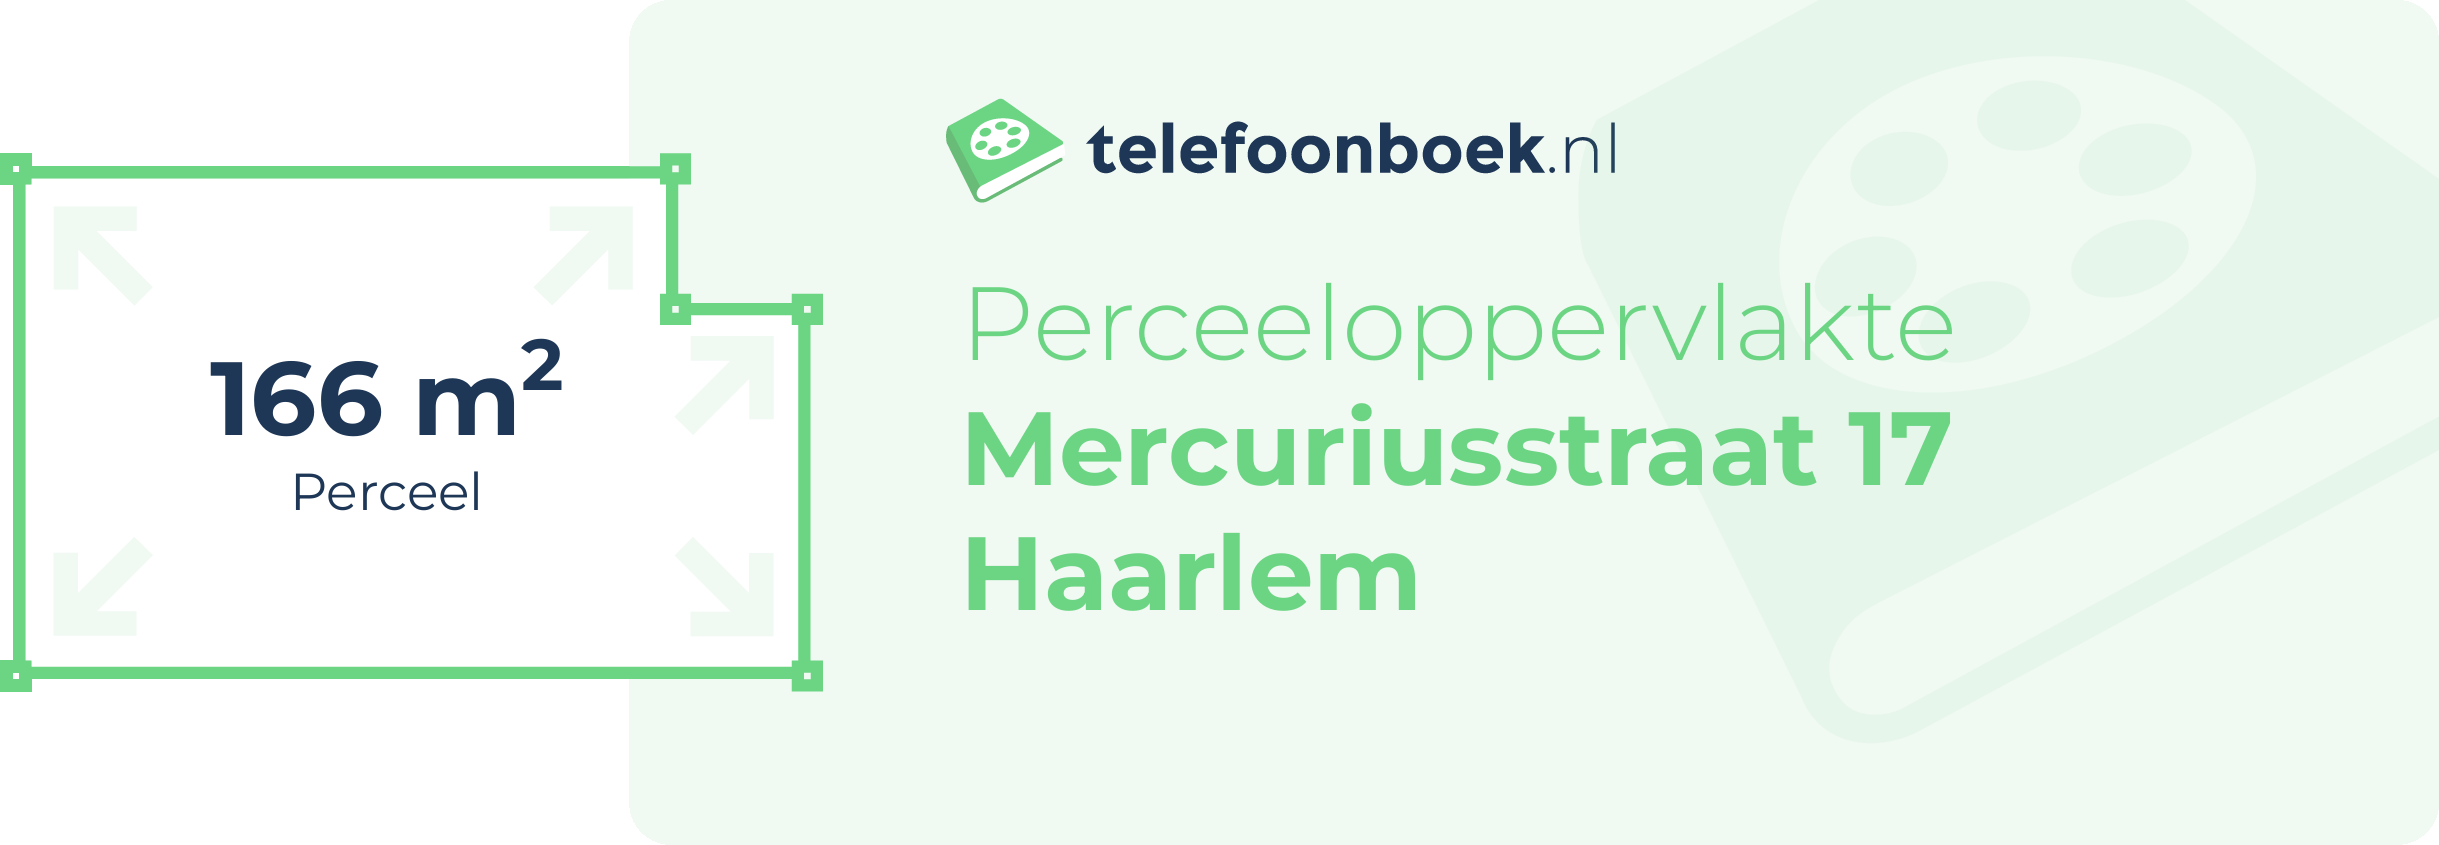 Perceeloppervlakte Mercuriusstraat 17 Haarlem